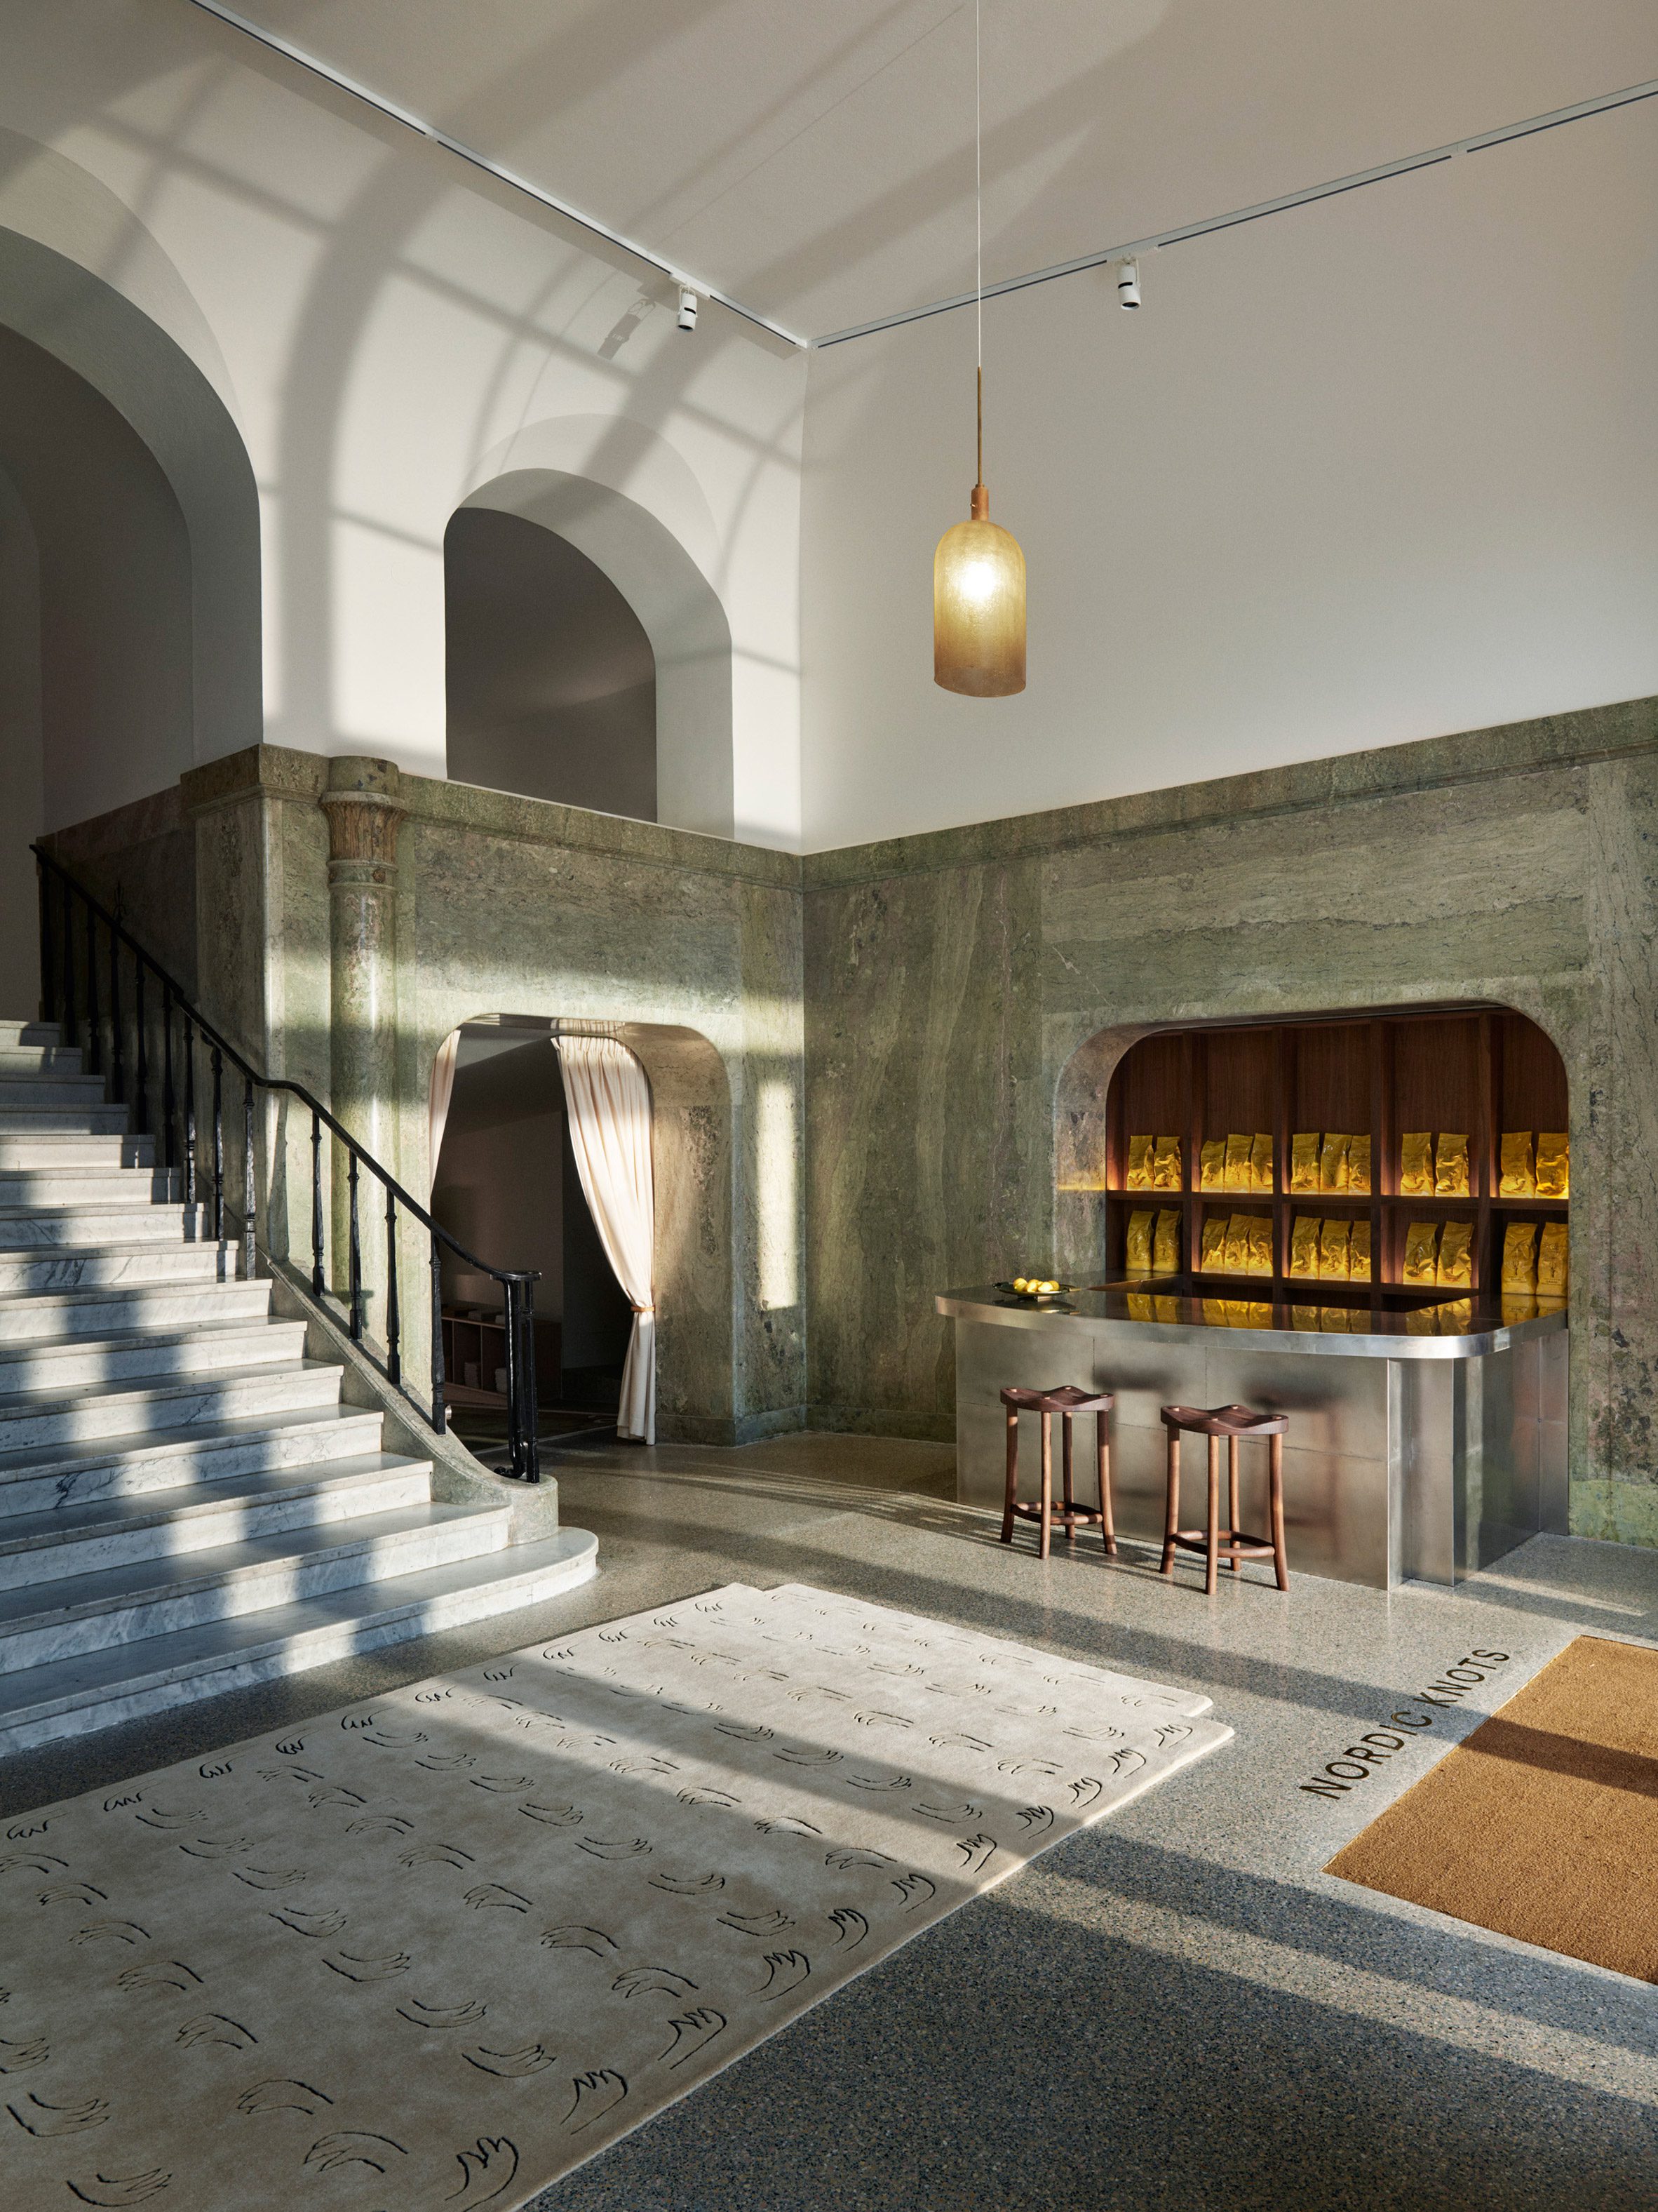 Studio Giancarlo Valle将斯德哥尔摩历史悠久的电影院改造成触觉地毯展厅|ART-Arrakis | 建筑室内设计的创新与灵感